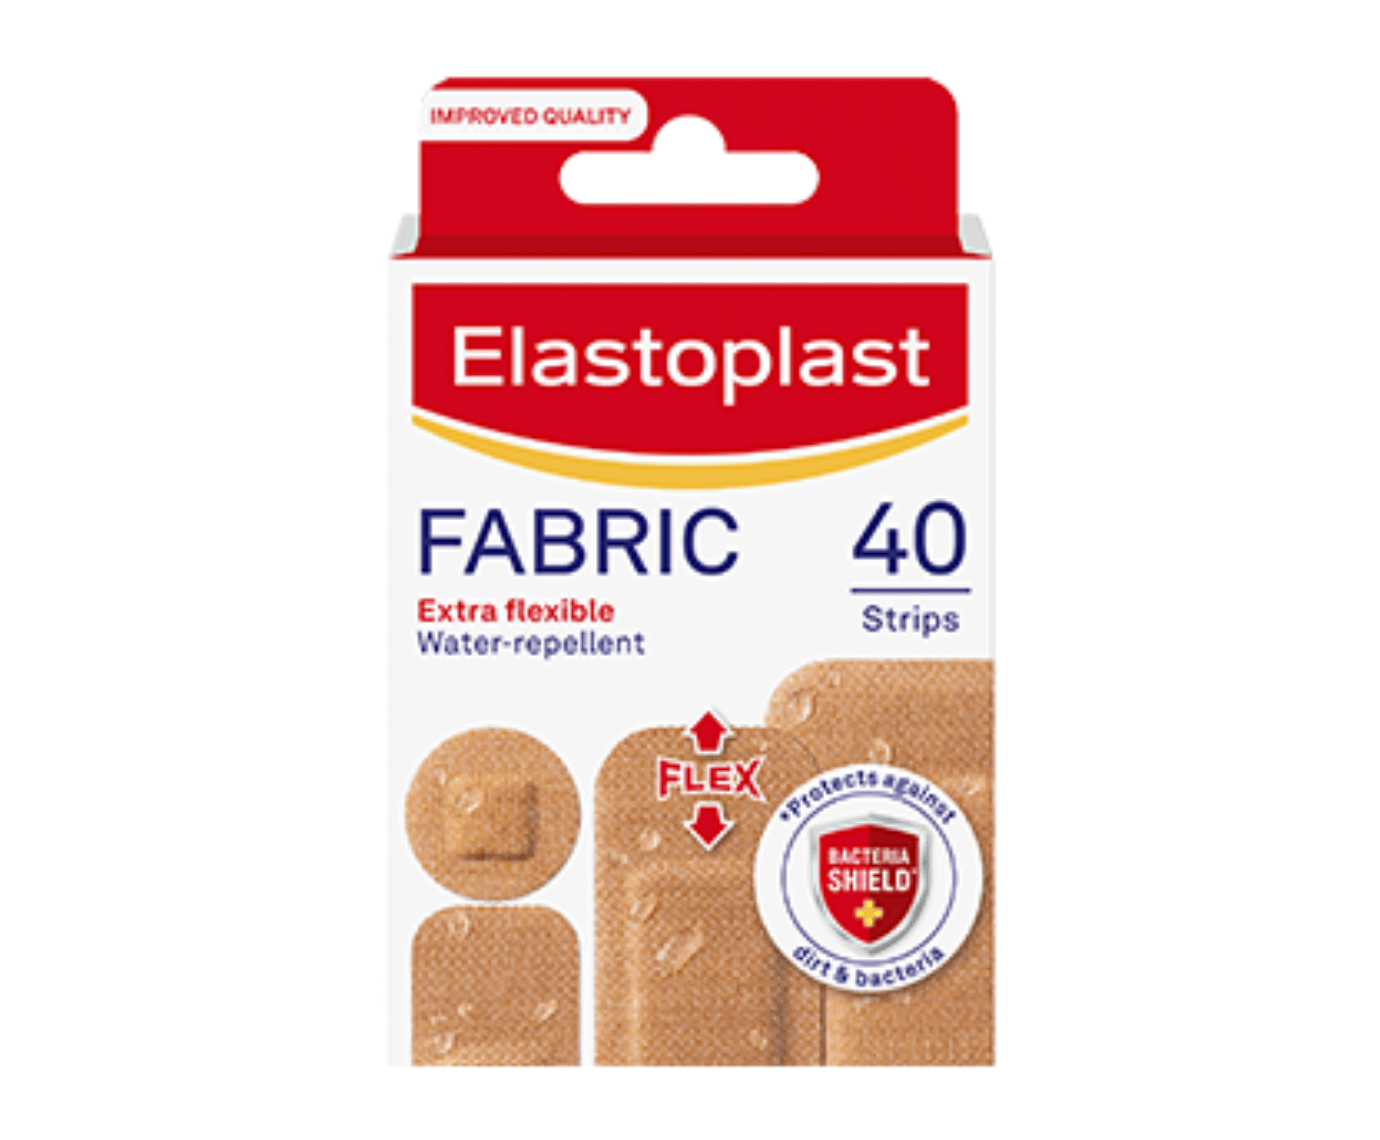 Packshot of Elastoplast Fabric 40 strips assorted